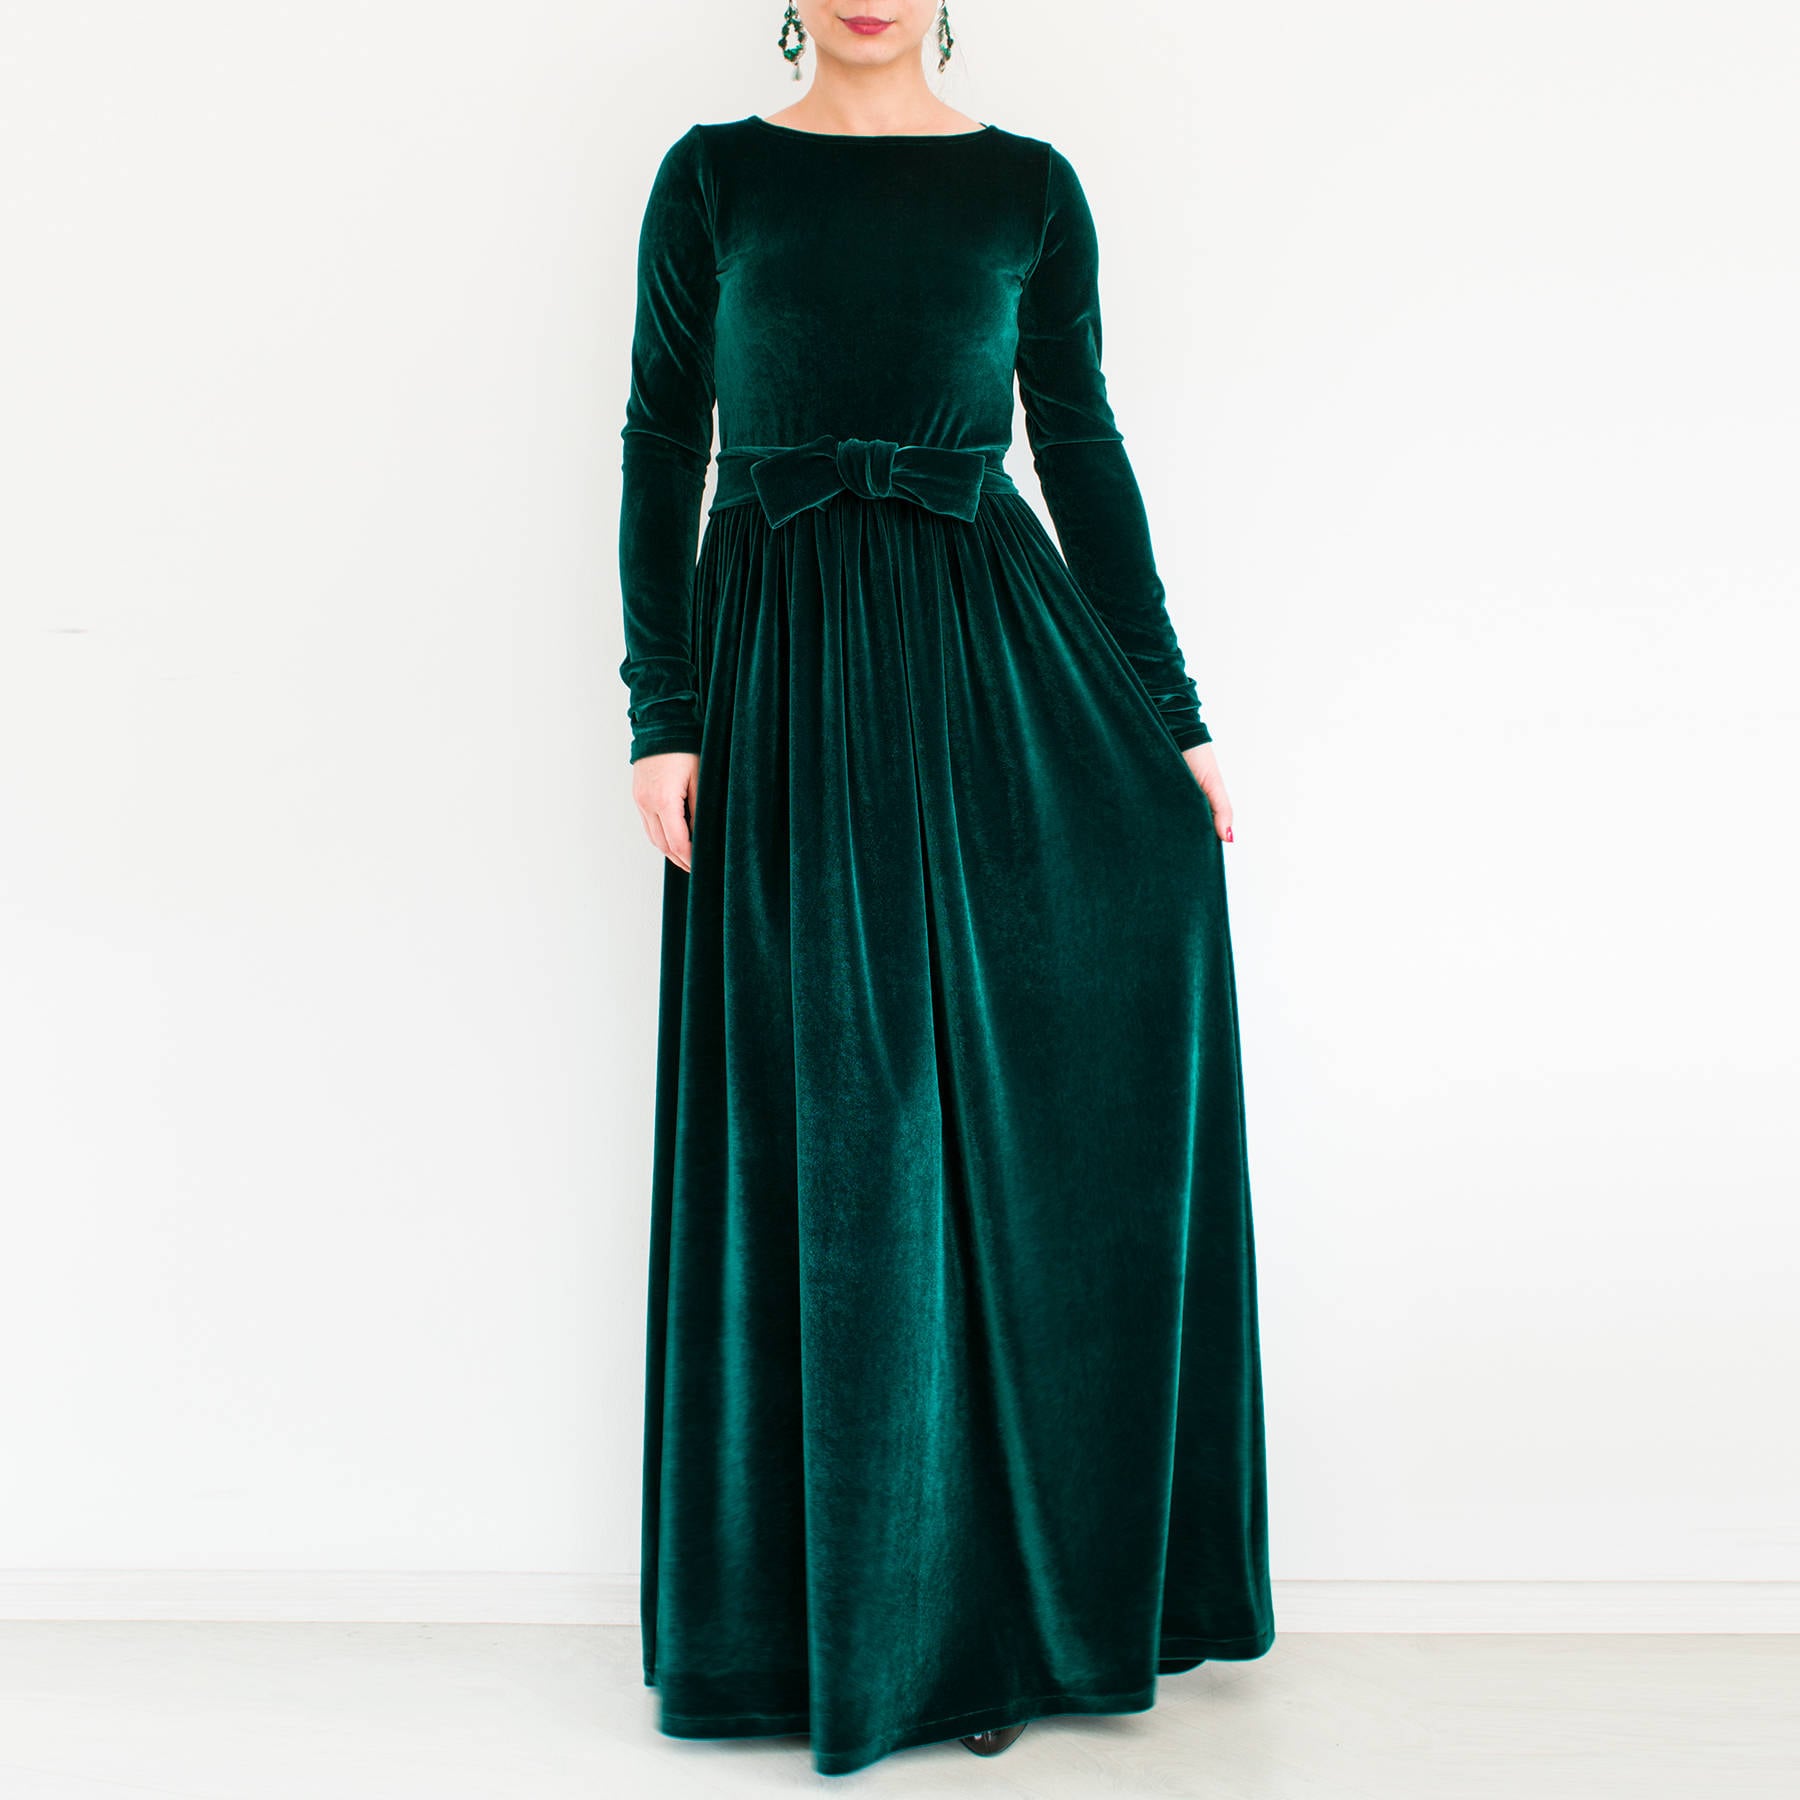 VELVET green dress/ plus size dress/ maxi dress/ Long sleeve